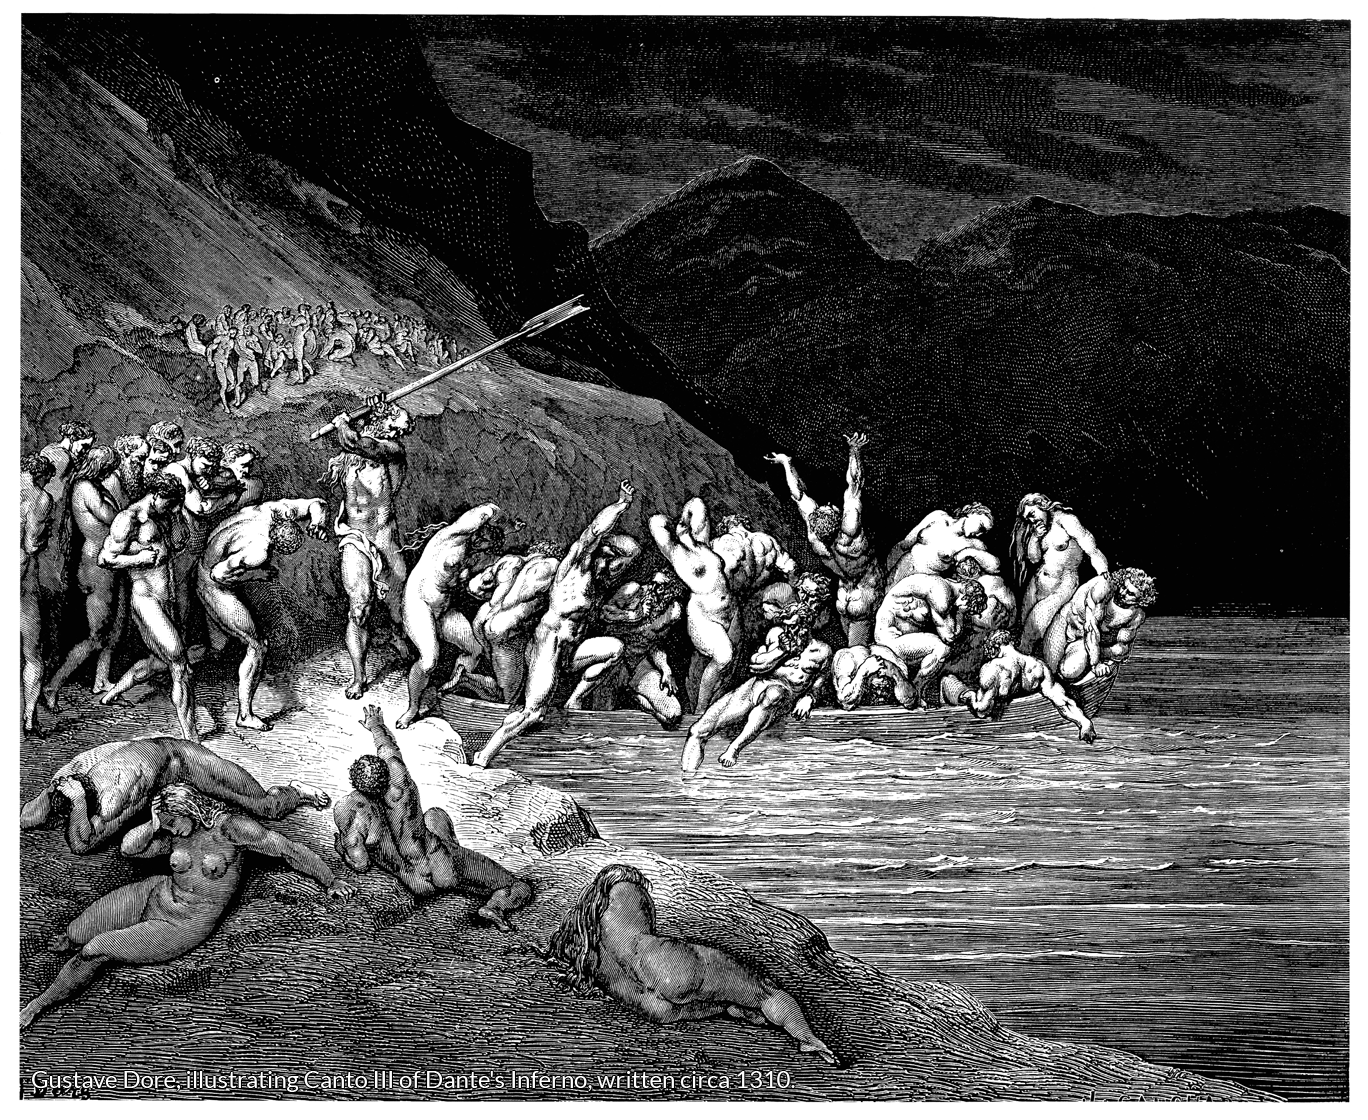 Gustave Dore, illustrating Canto III of Dante's Inferno, written circa 1310.